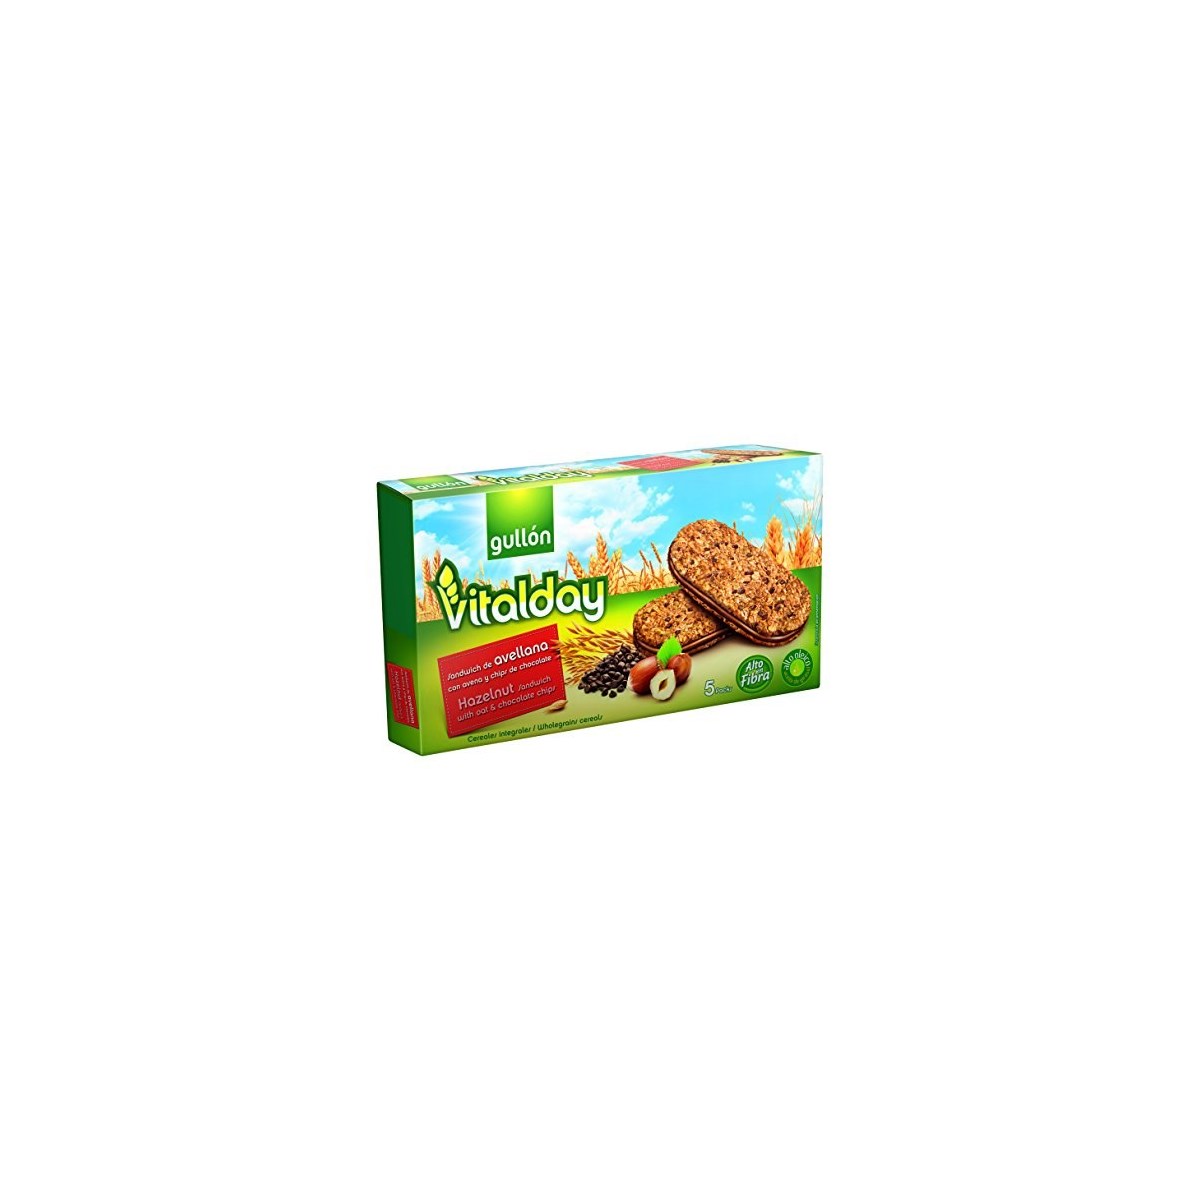 Vitalday Breakfast Chocolate Crunch Biscuits w/ Wh